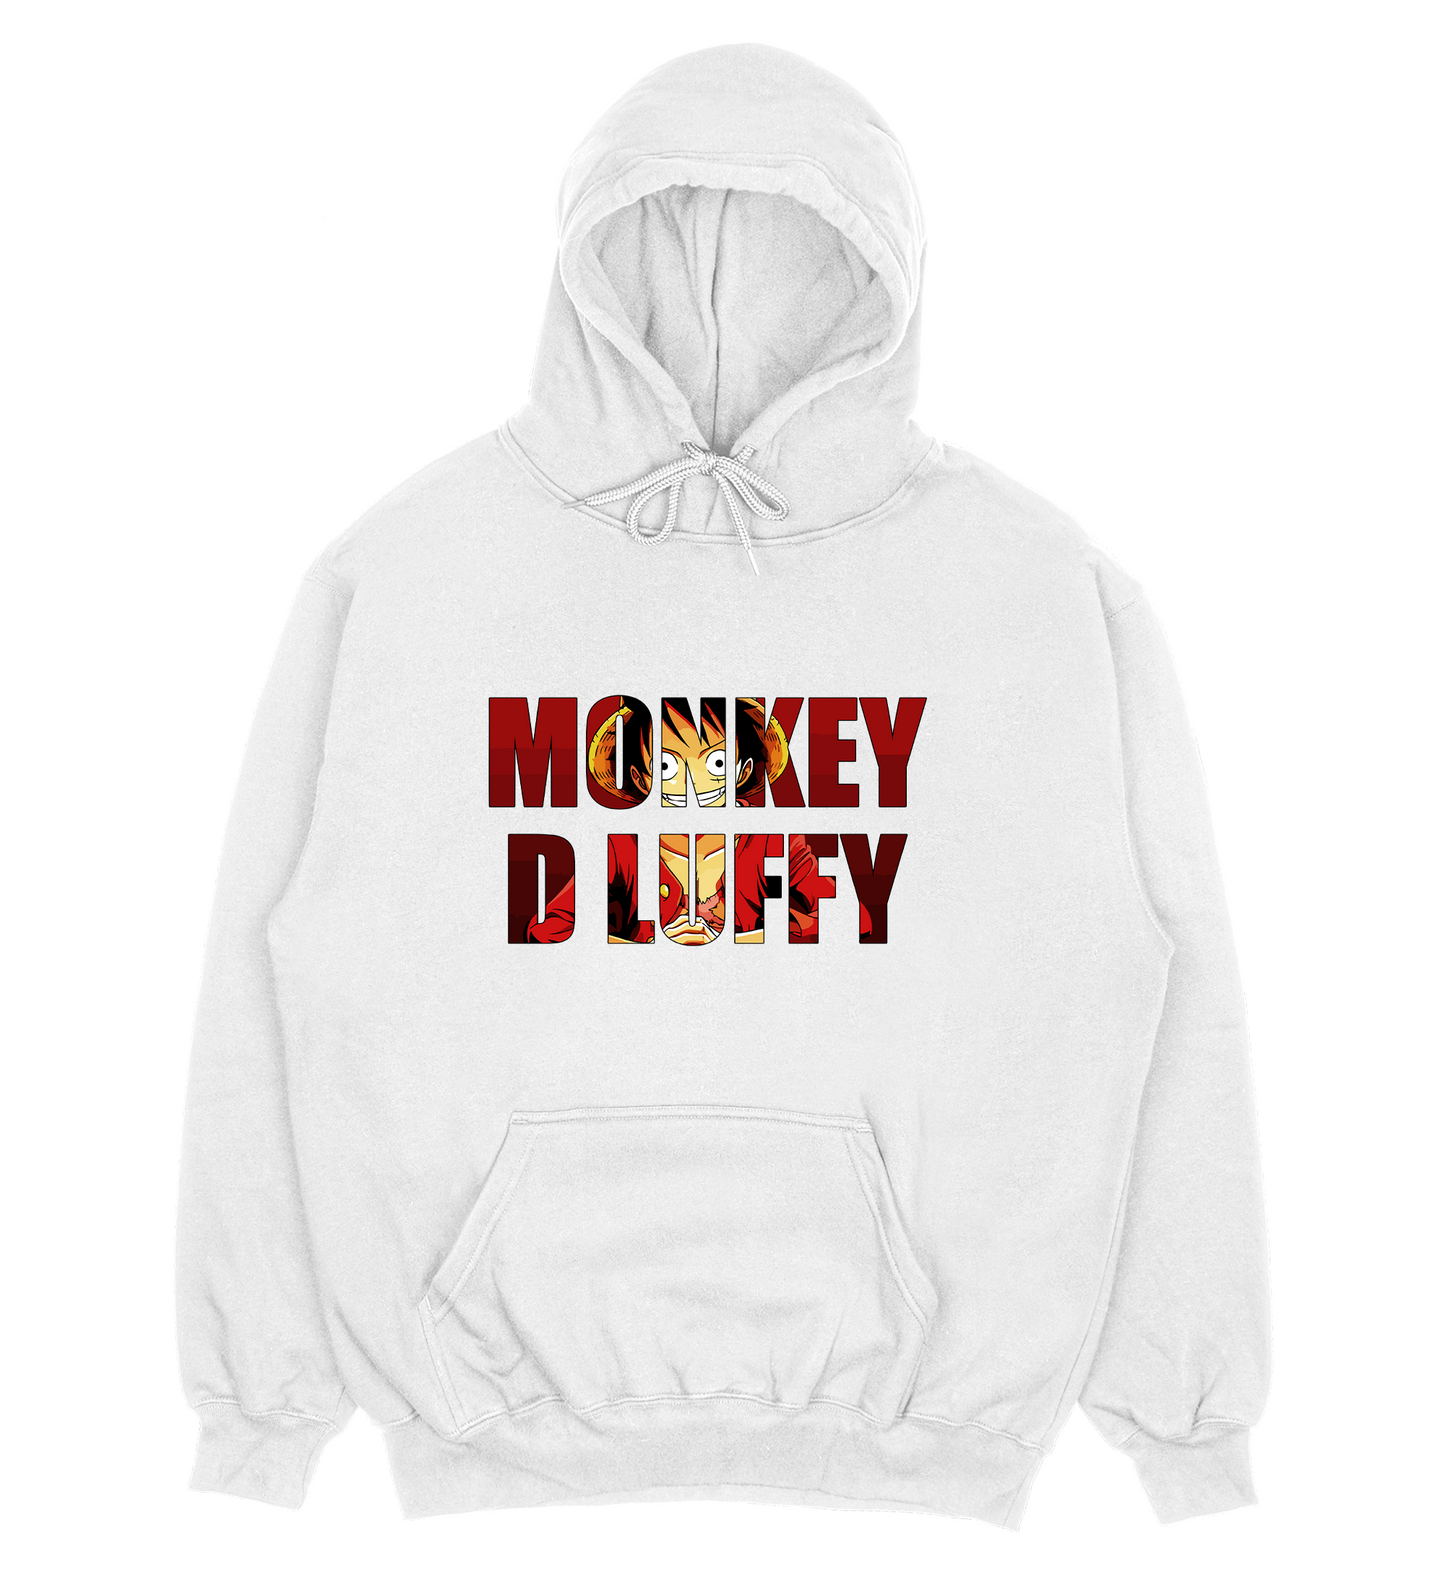 Monkey D Luffy Name Anime Unisex Hoodie